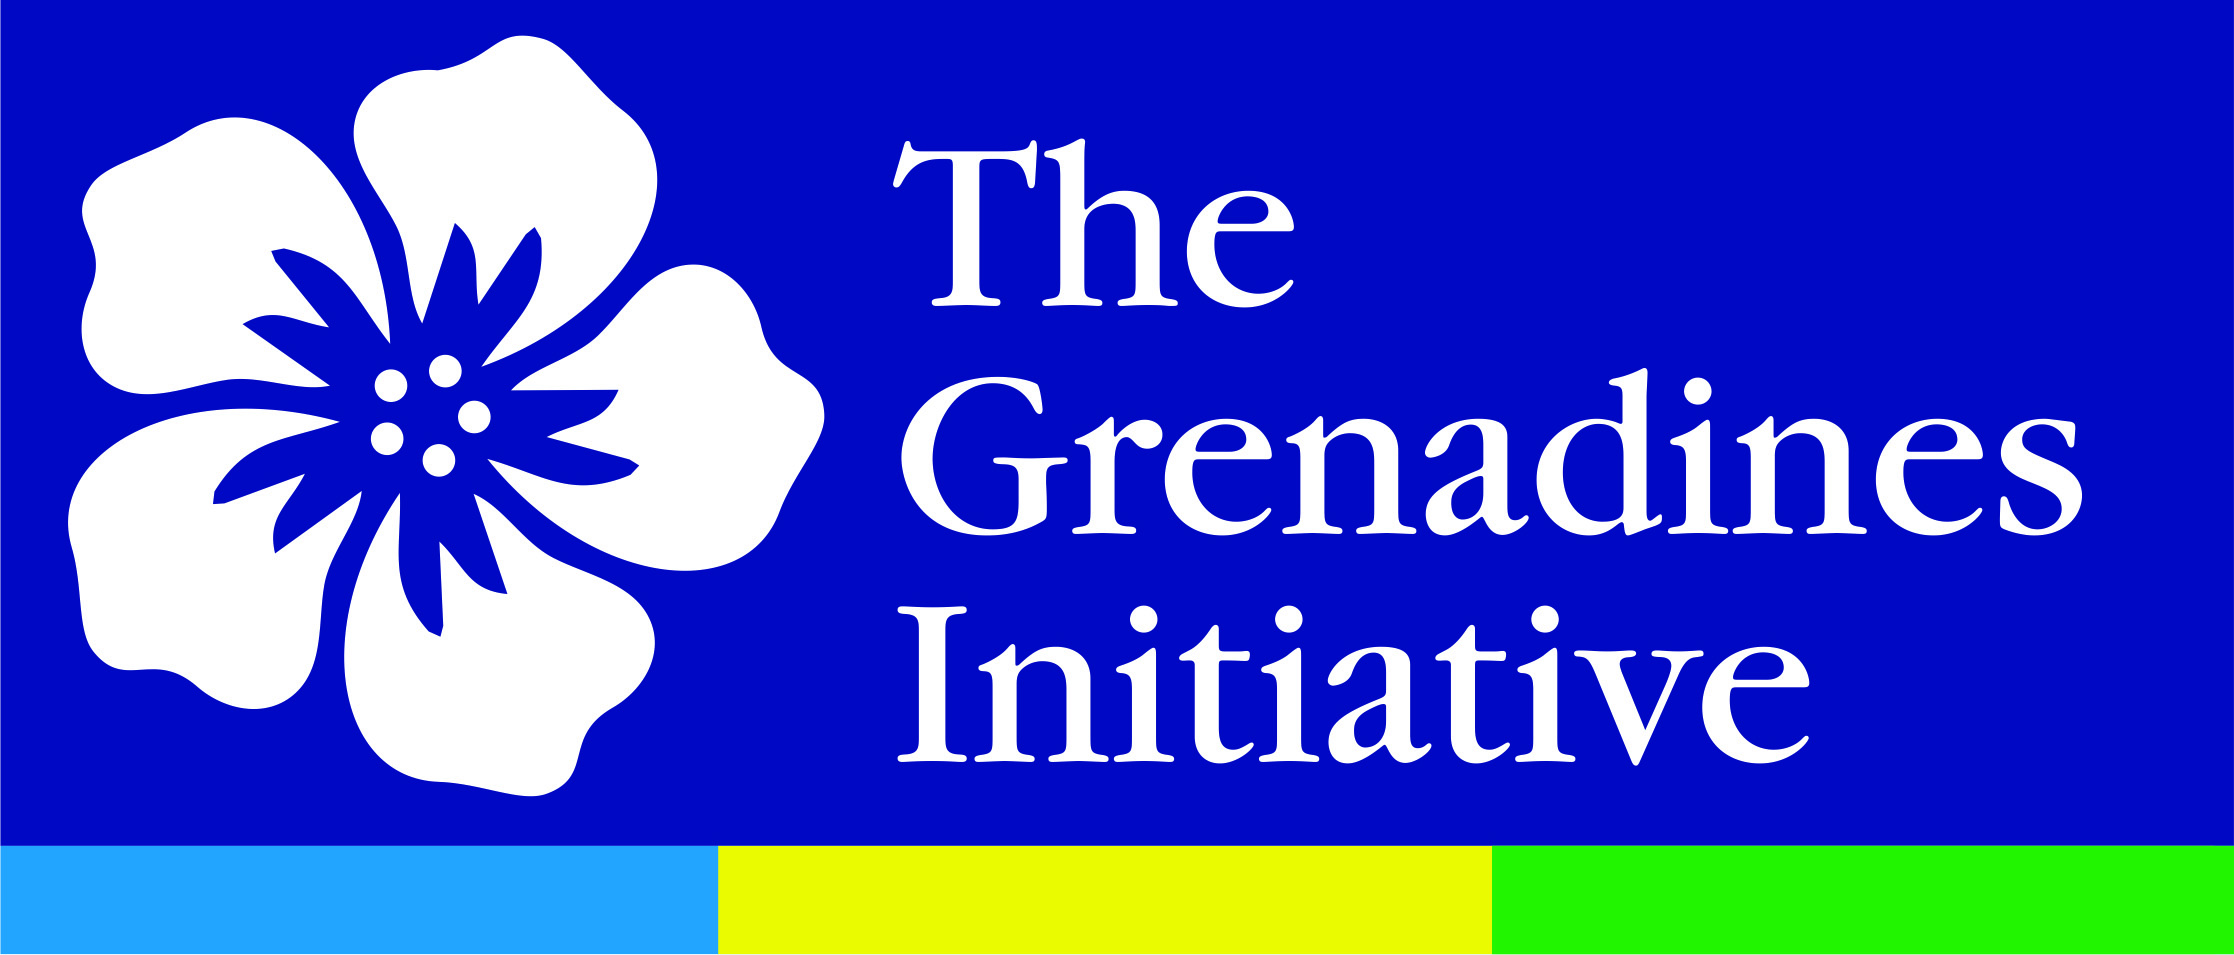 The Grenadines Initiative logo